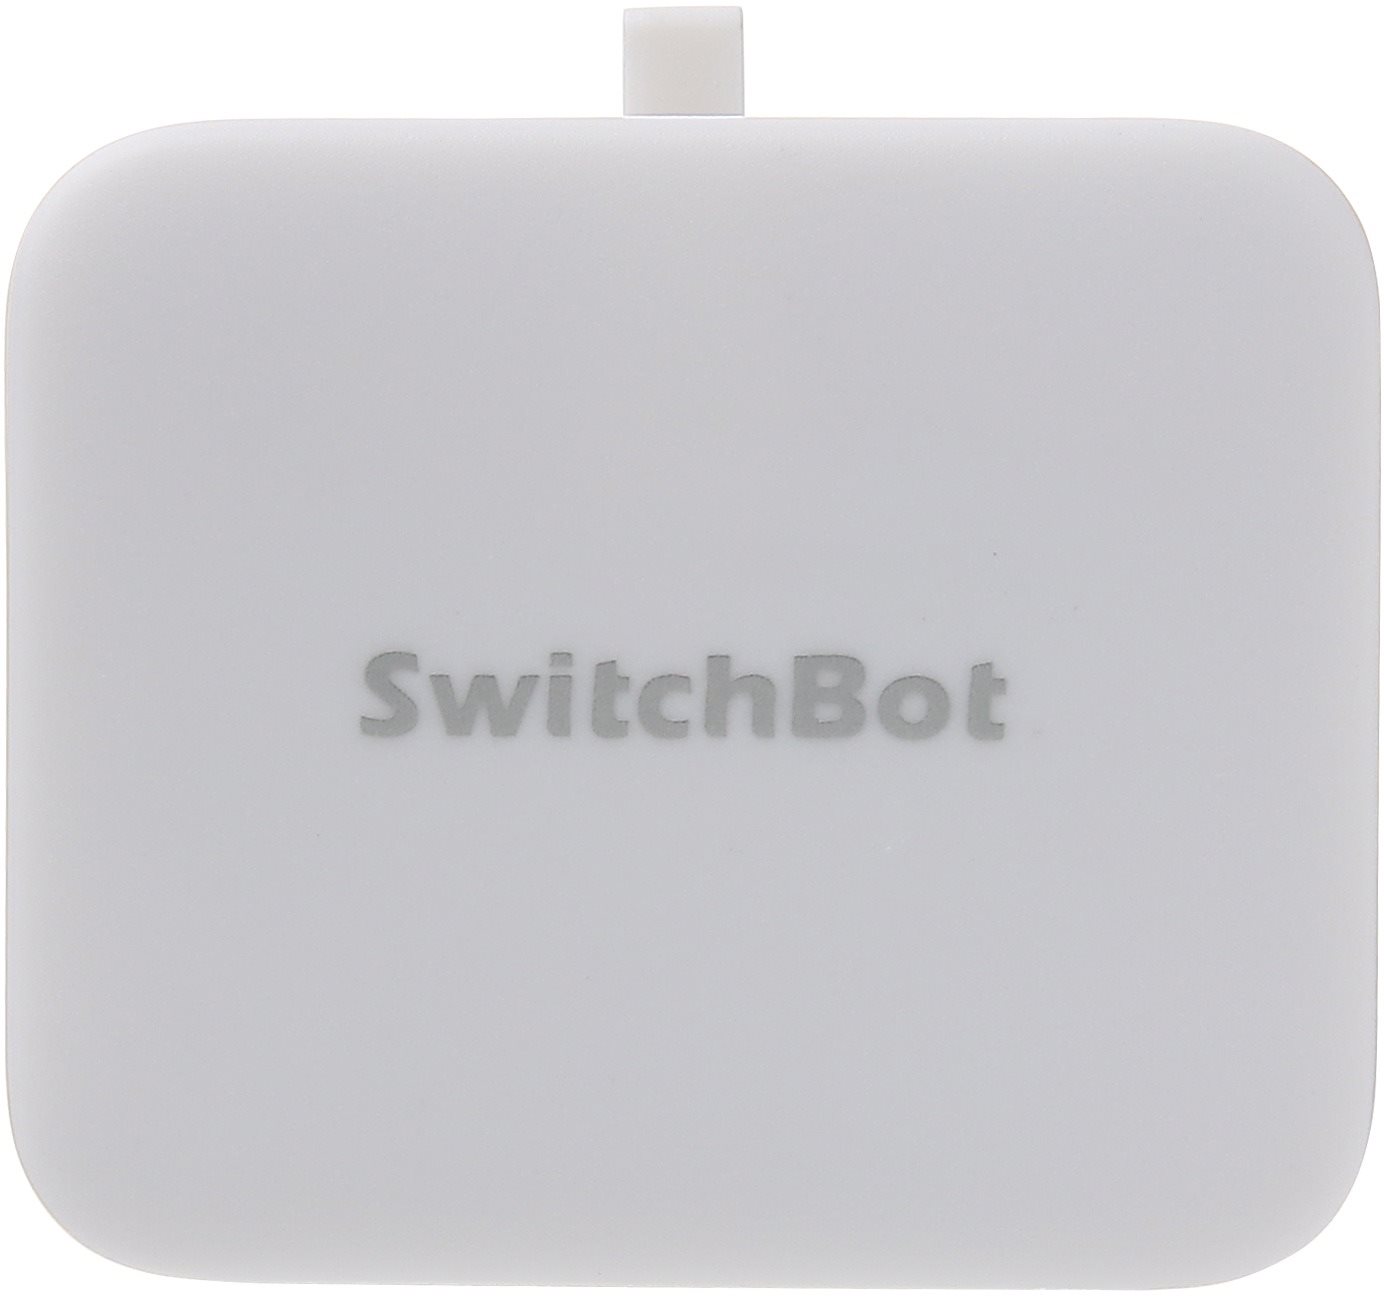 Kapcsoló SwitchBot Bot